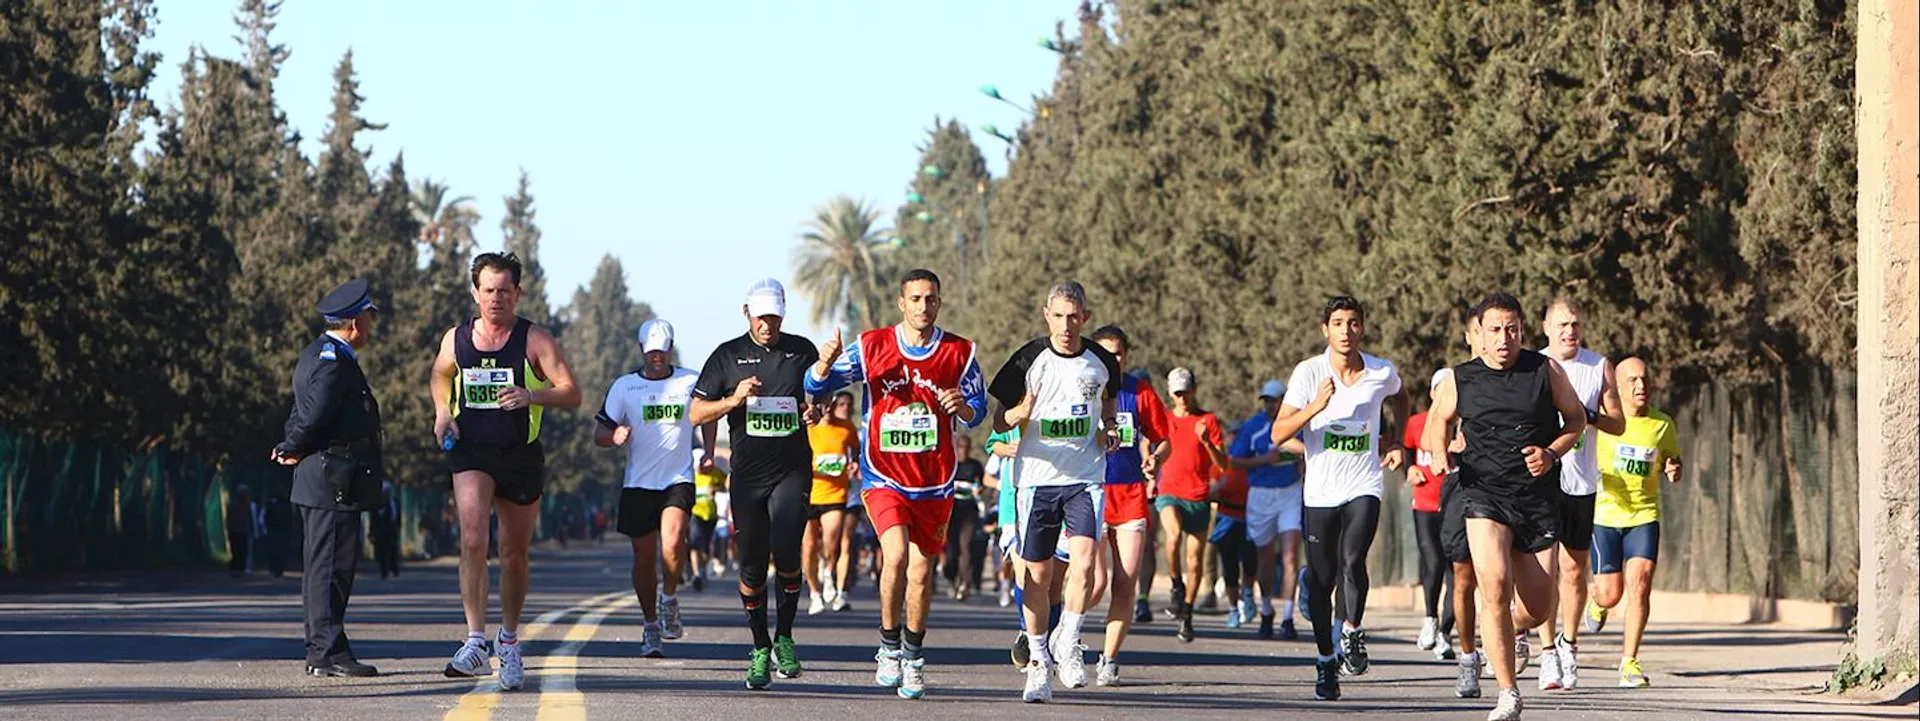 Image of International Marathon of Marrakech